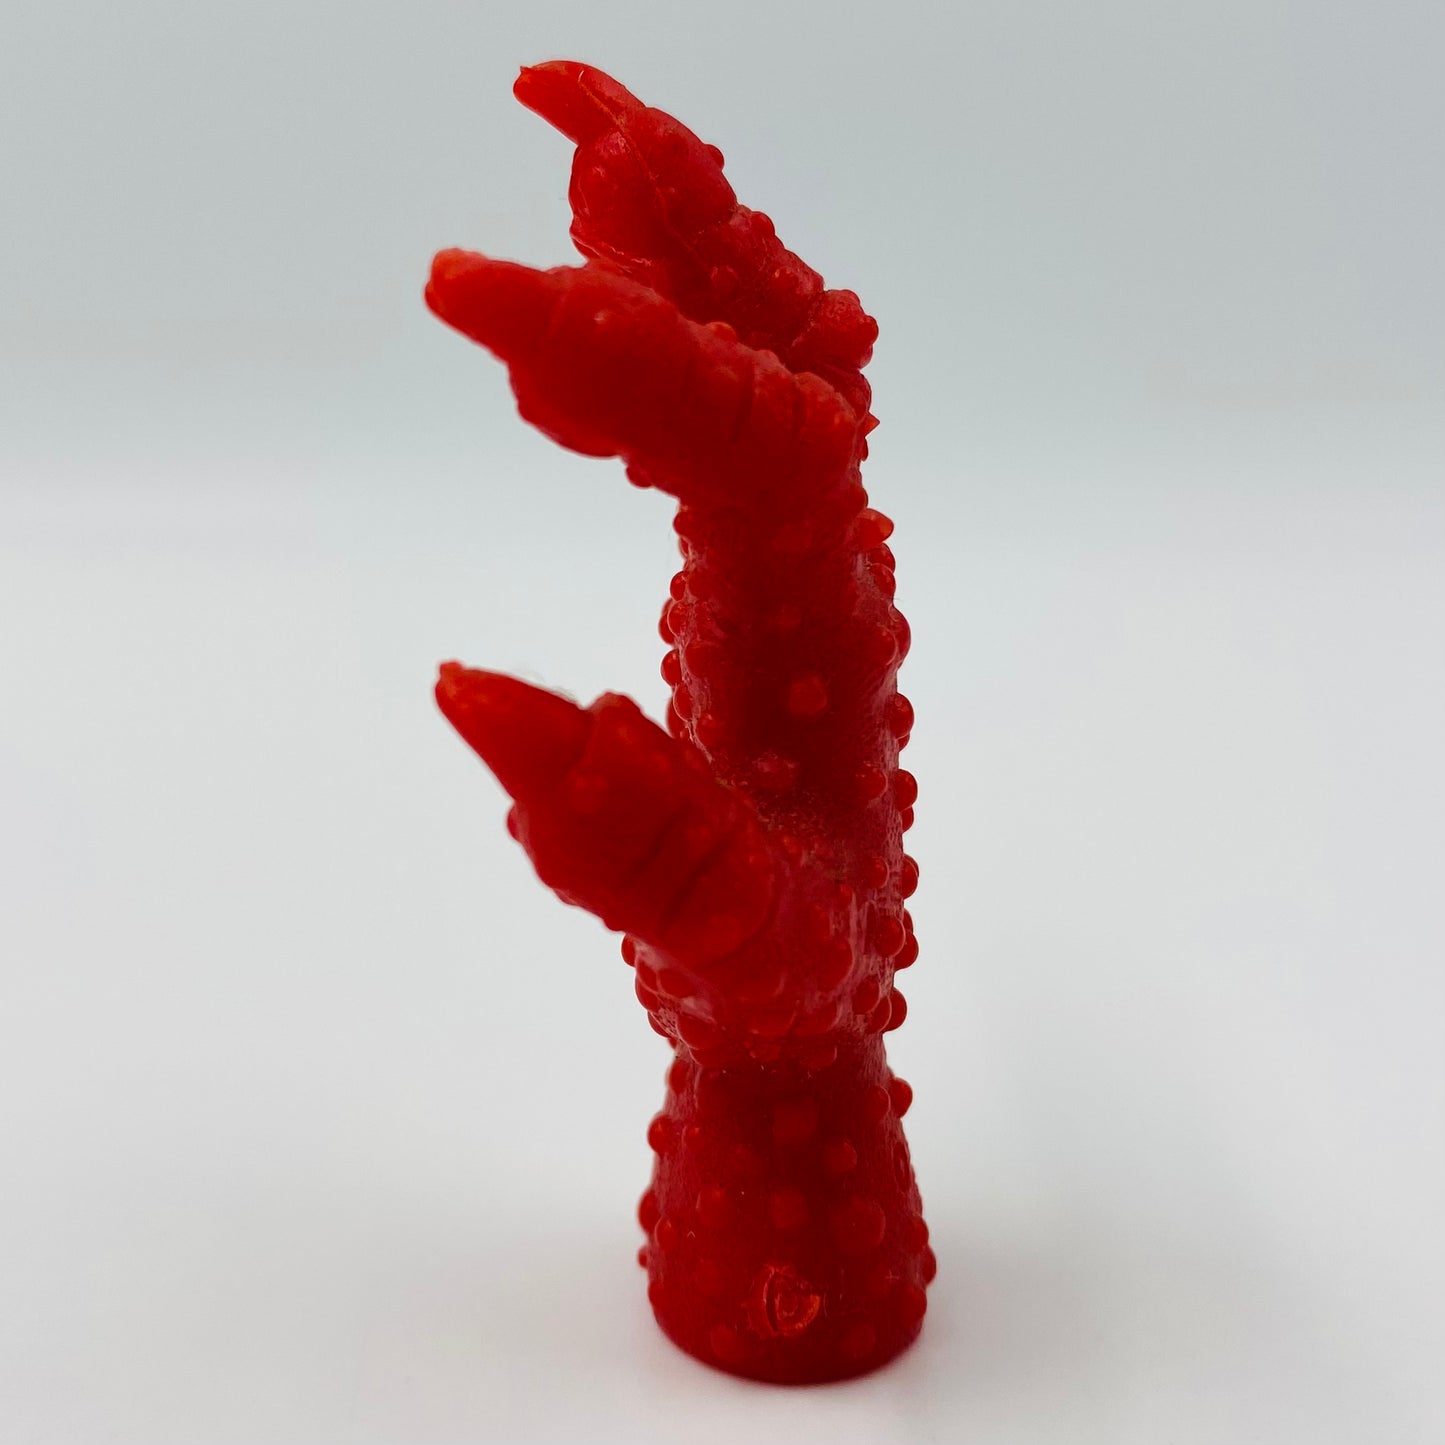 M.U.S.C.L.E. #153 red Sneagator (C) loose 2” figurine (1980’s)Mattel